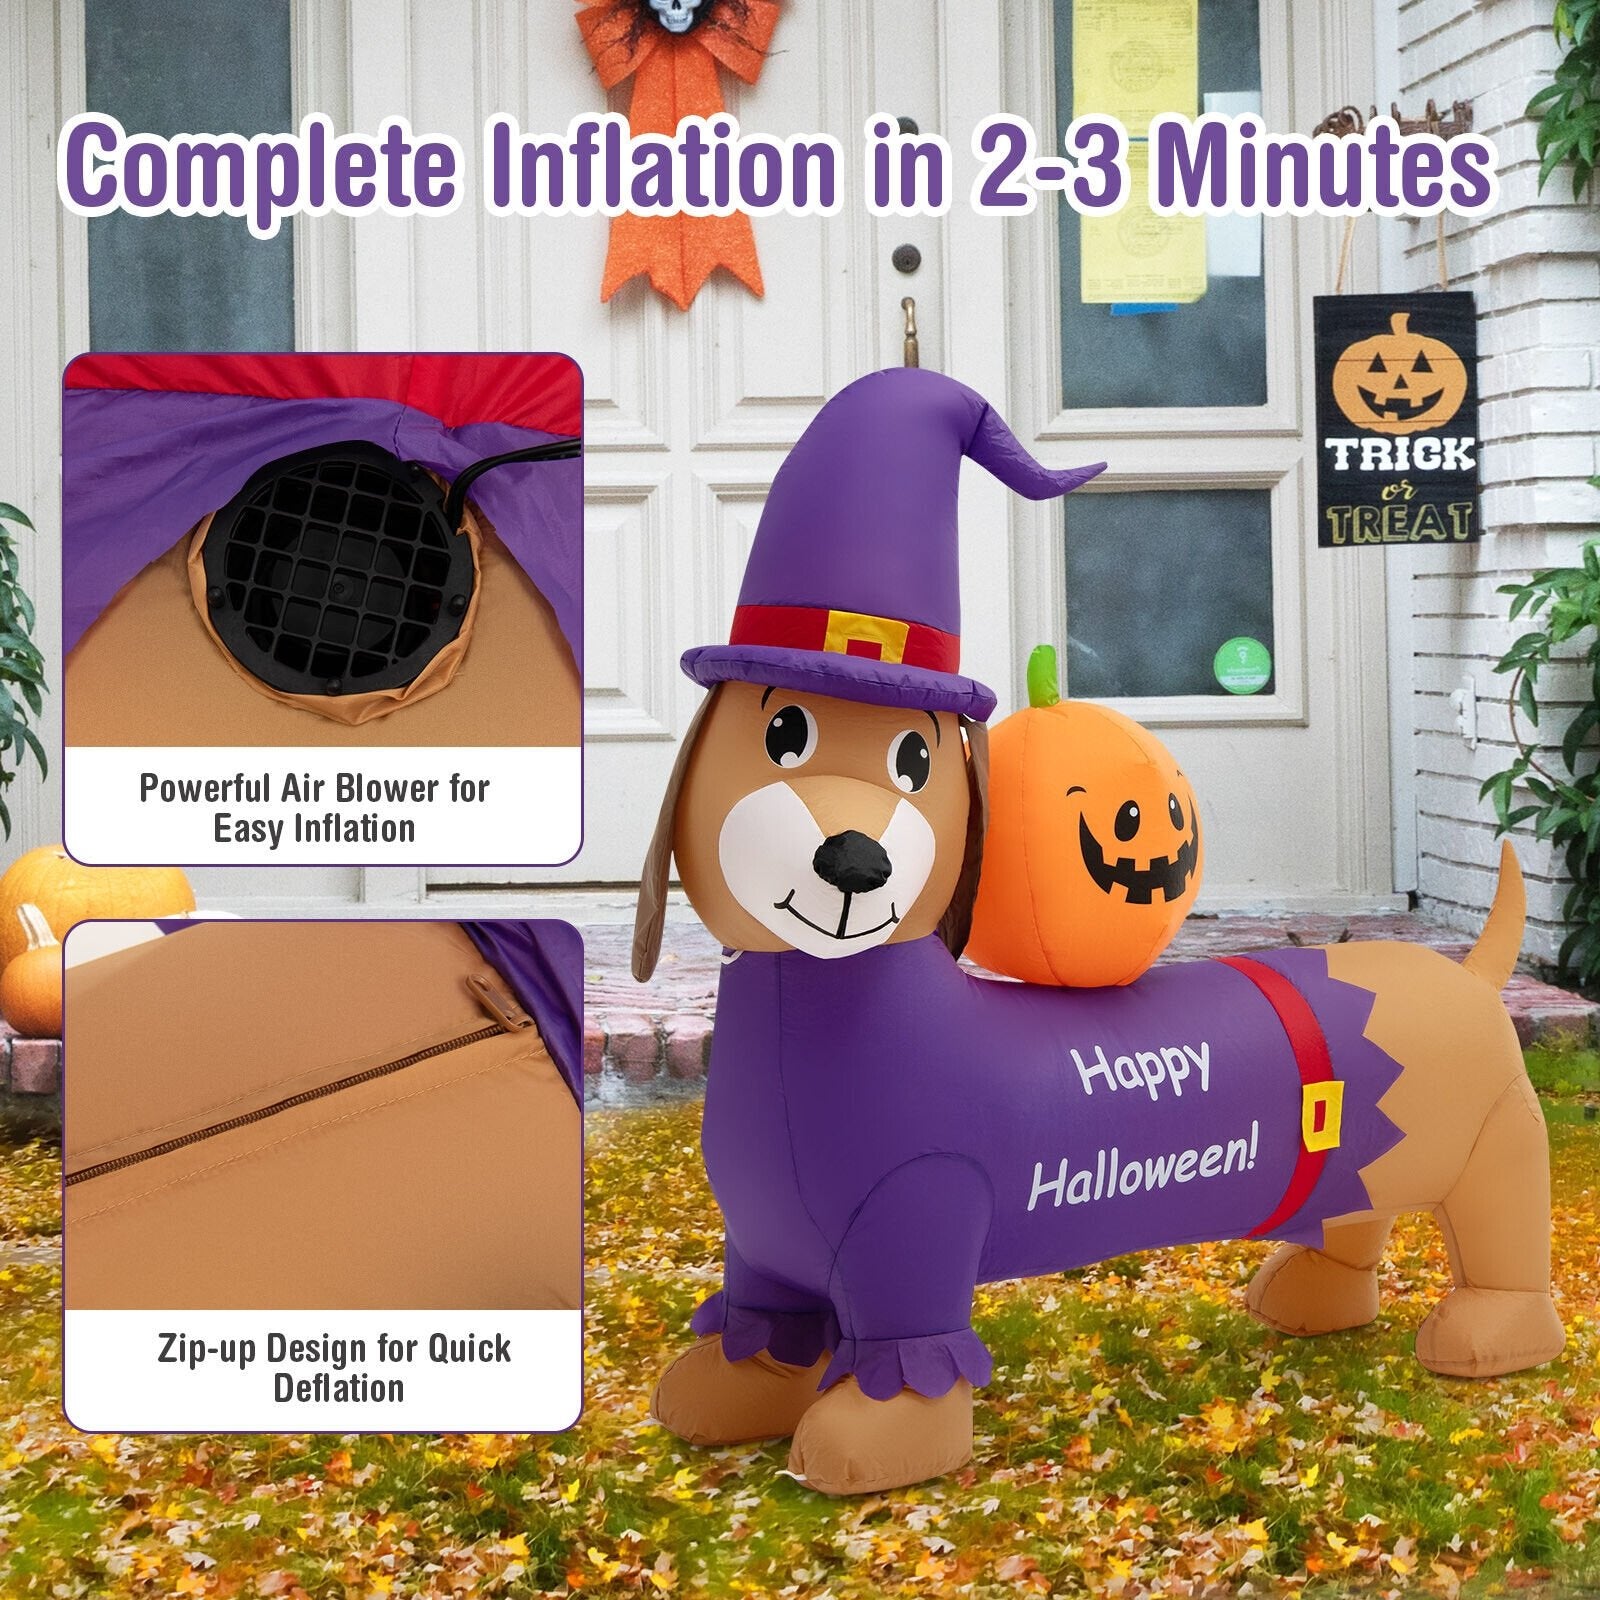 5 Feet Long Halloween Inflatable Dachshund Dog with Pumpkin, Purple - Gallery Canada